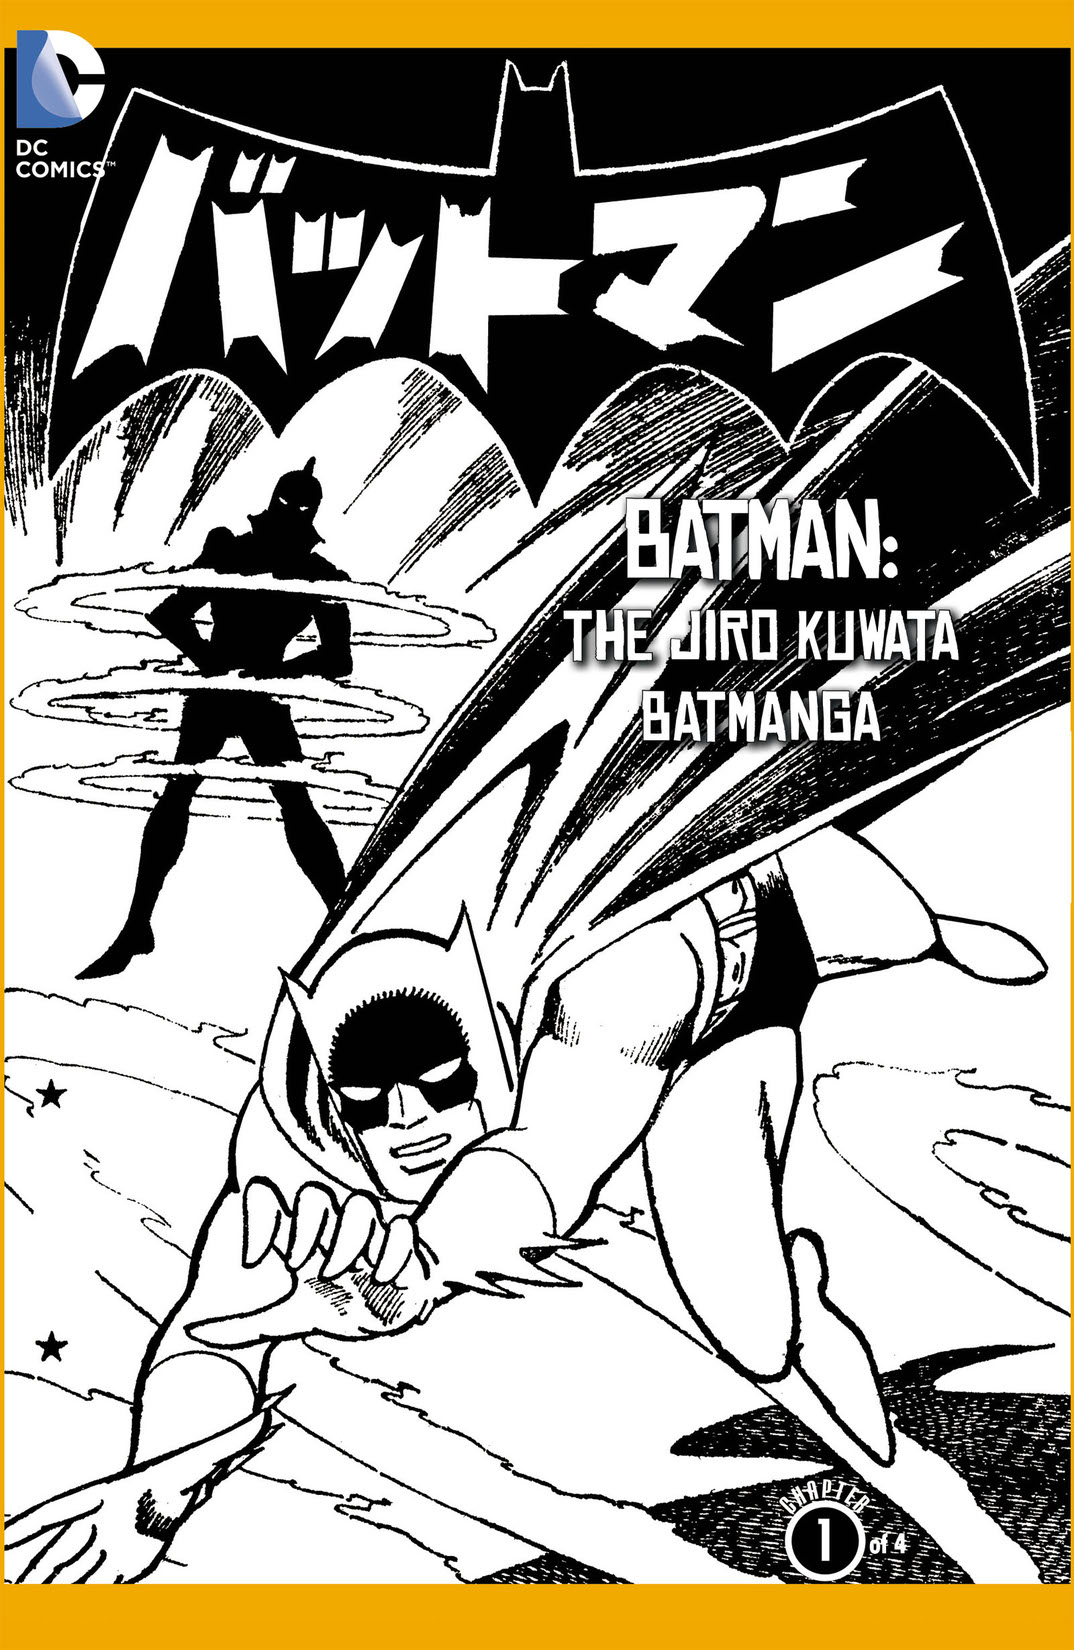 Batman: The Jiro Kuwata Batmanga #40 preview images